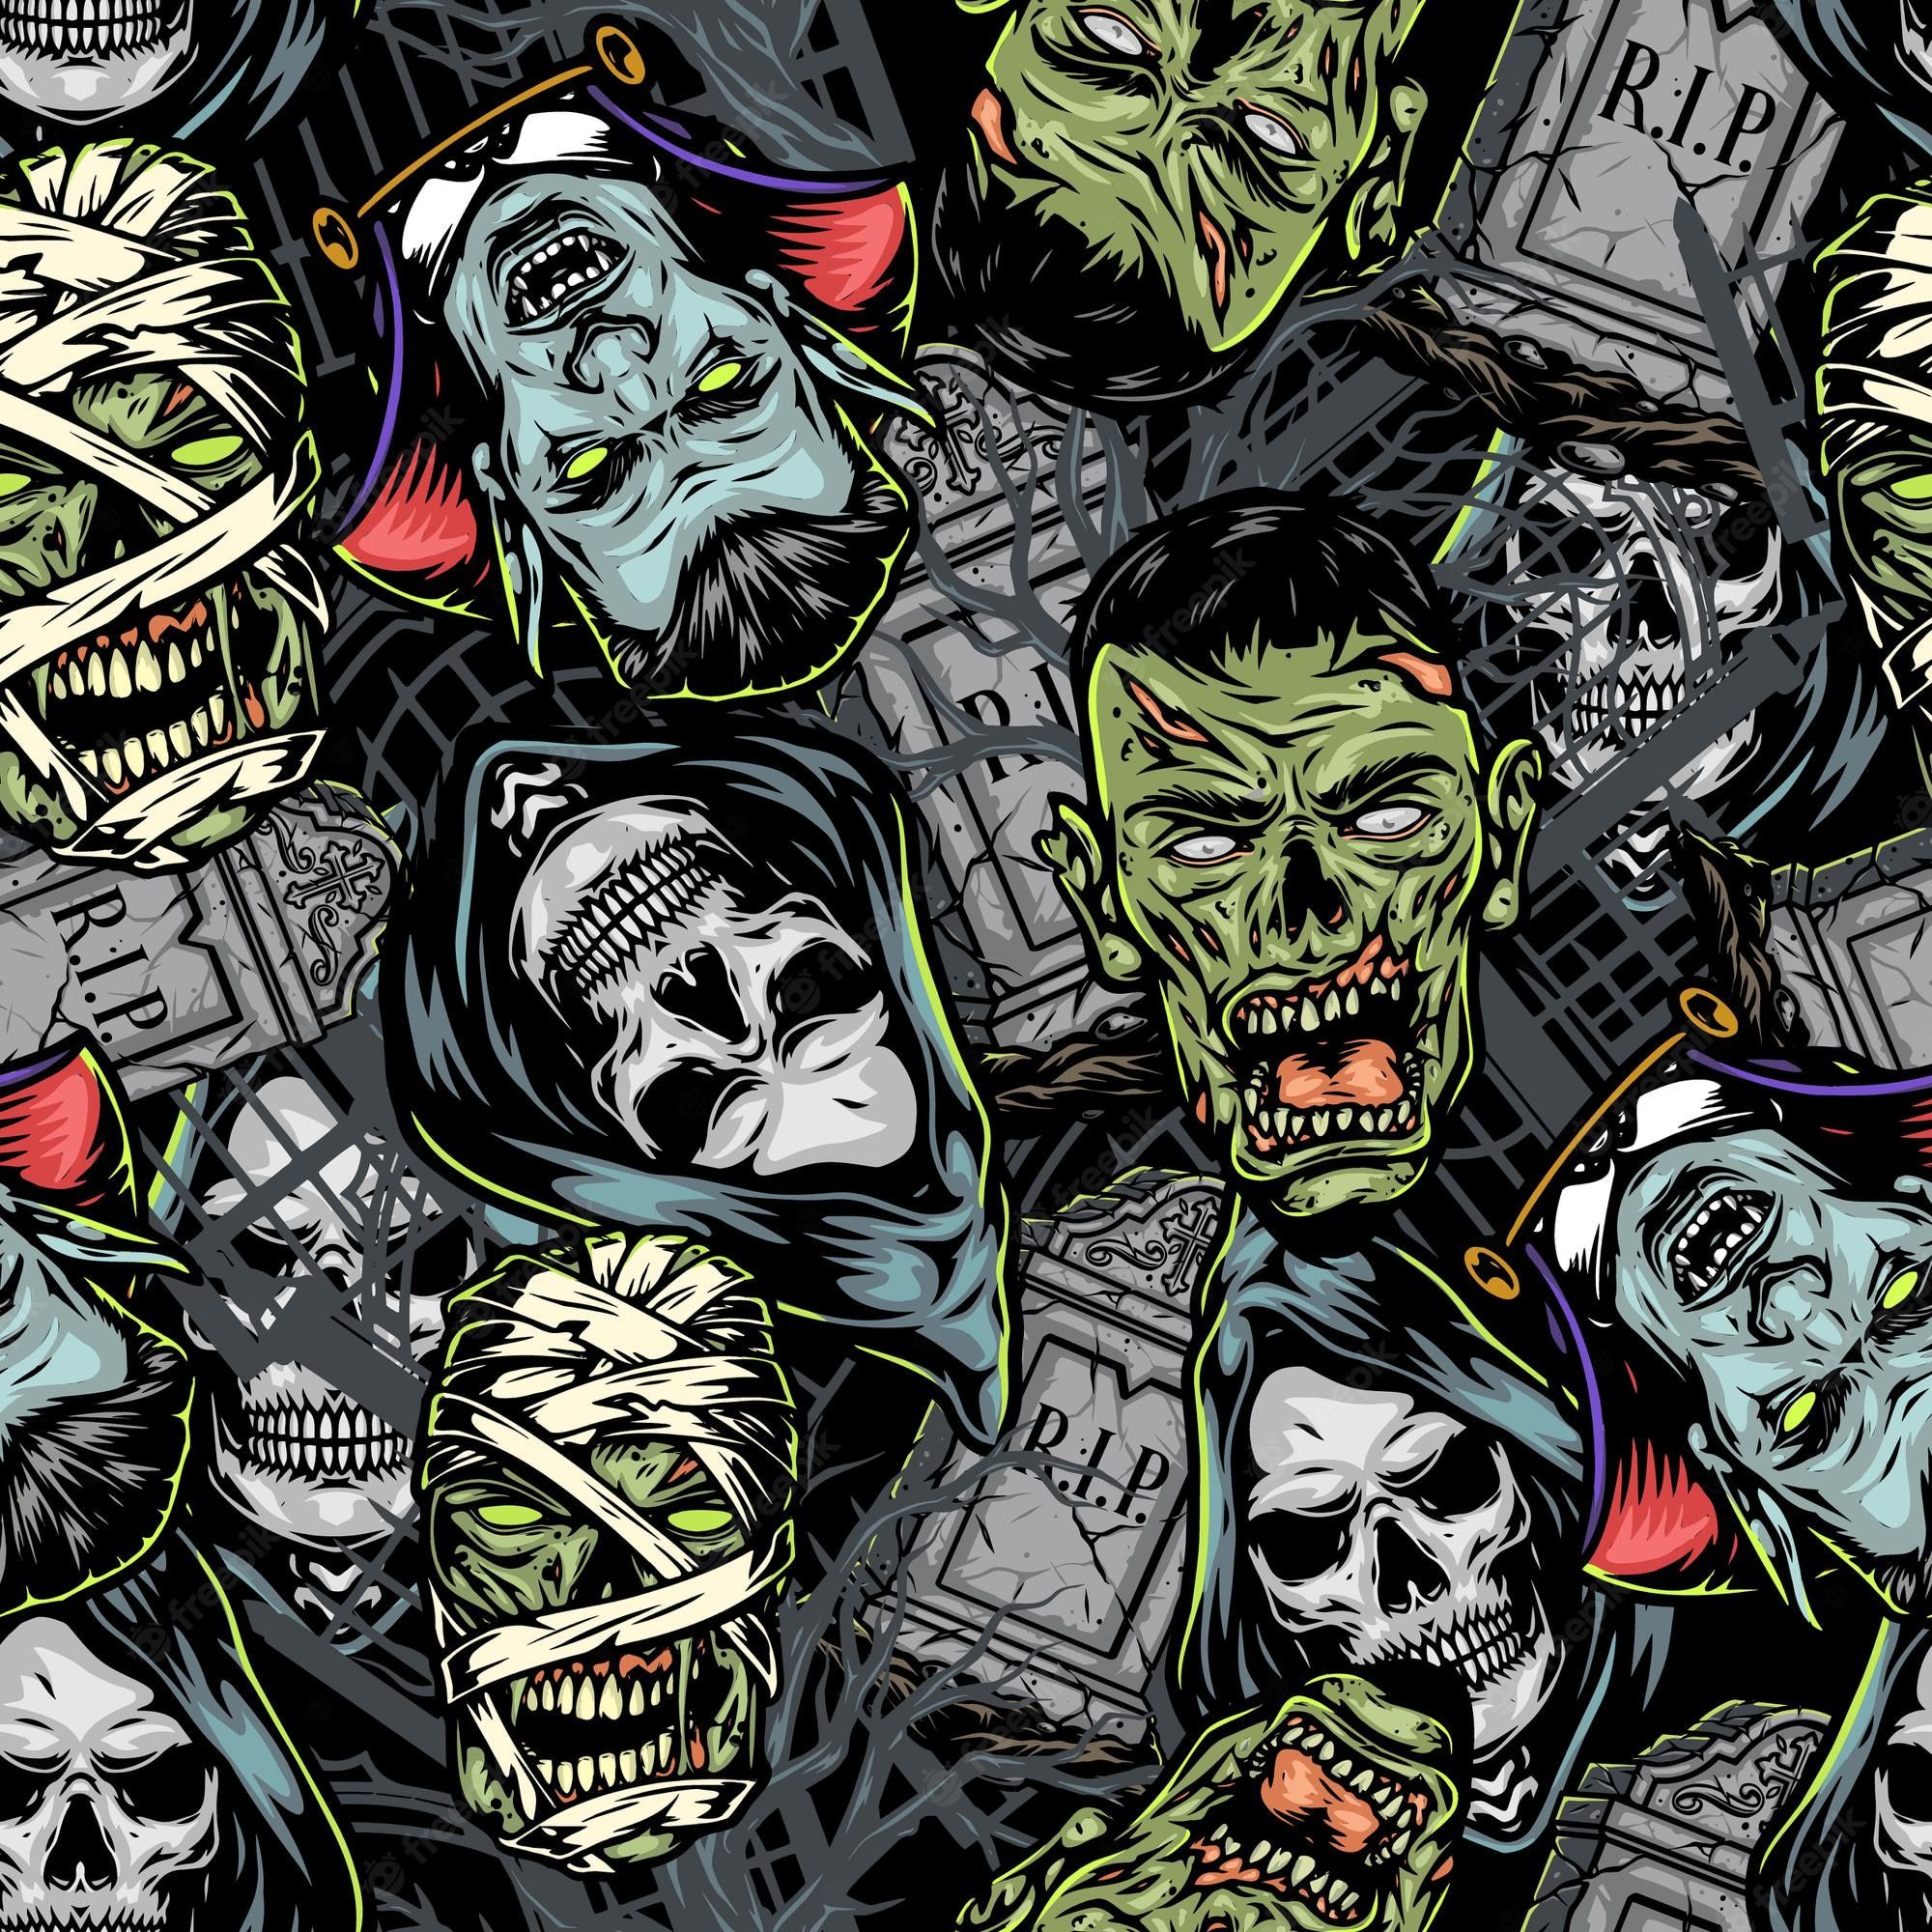  Zombie Hintergrundbild 2000x2000. Skull wallpaper Vectors & Illustrations for Free Download